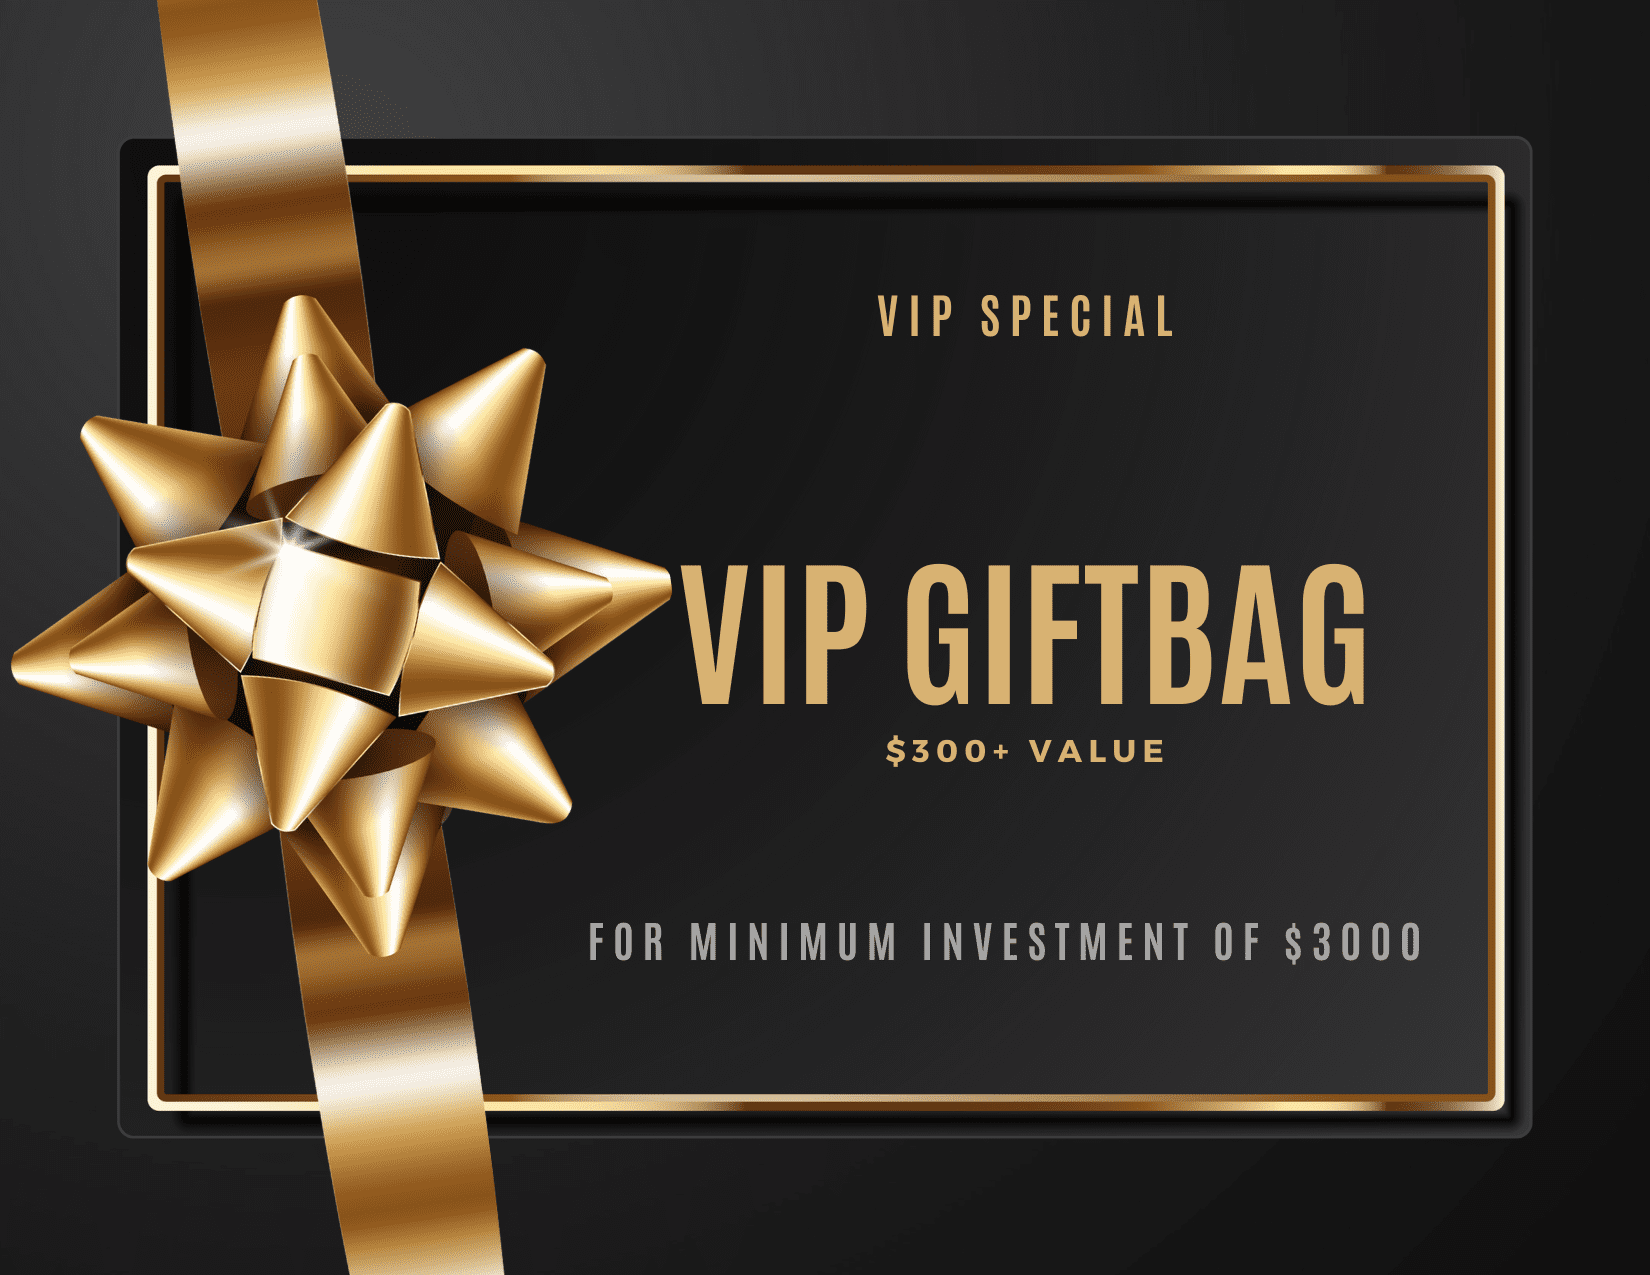 vip gift bag $300+ value for minimum investment of $3000